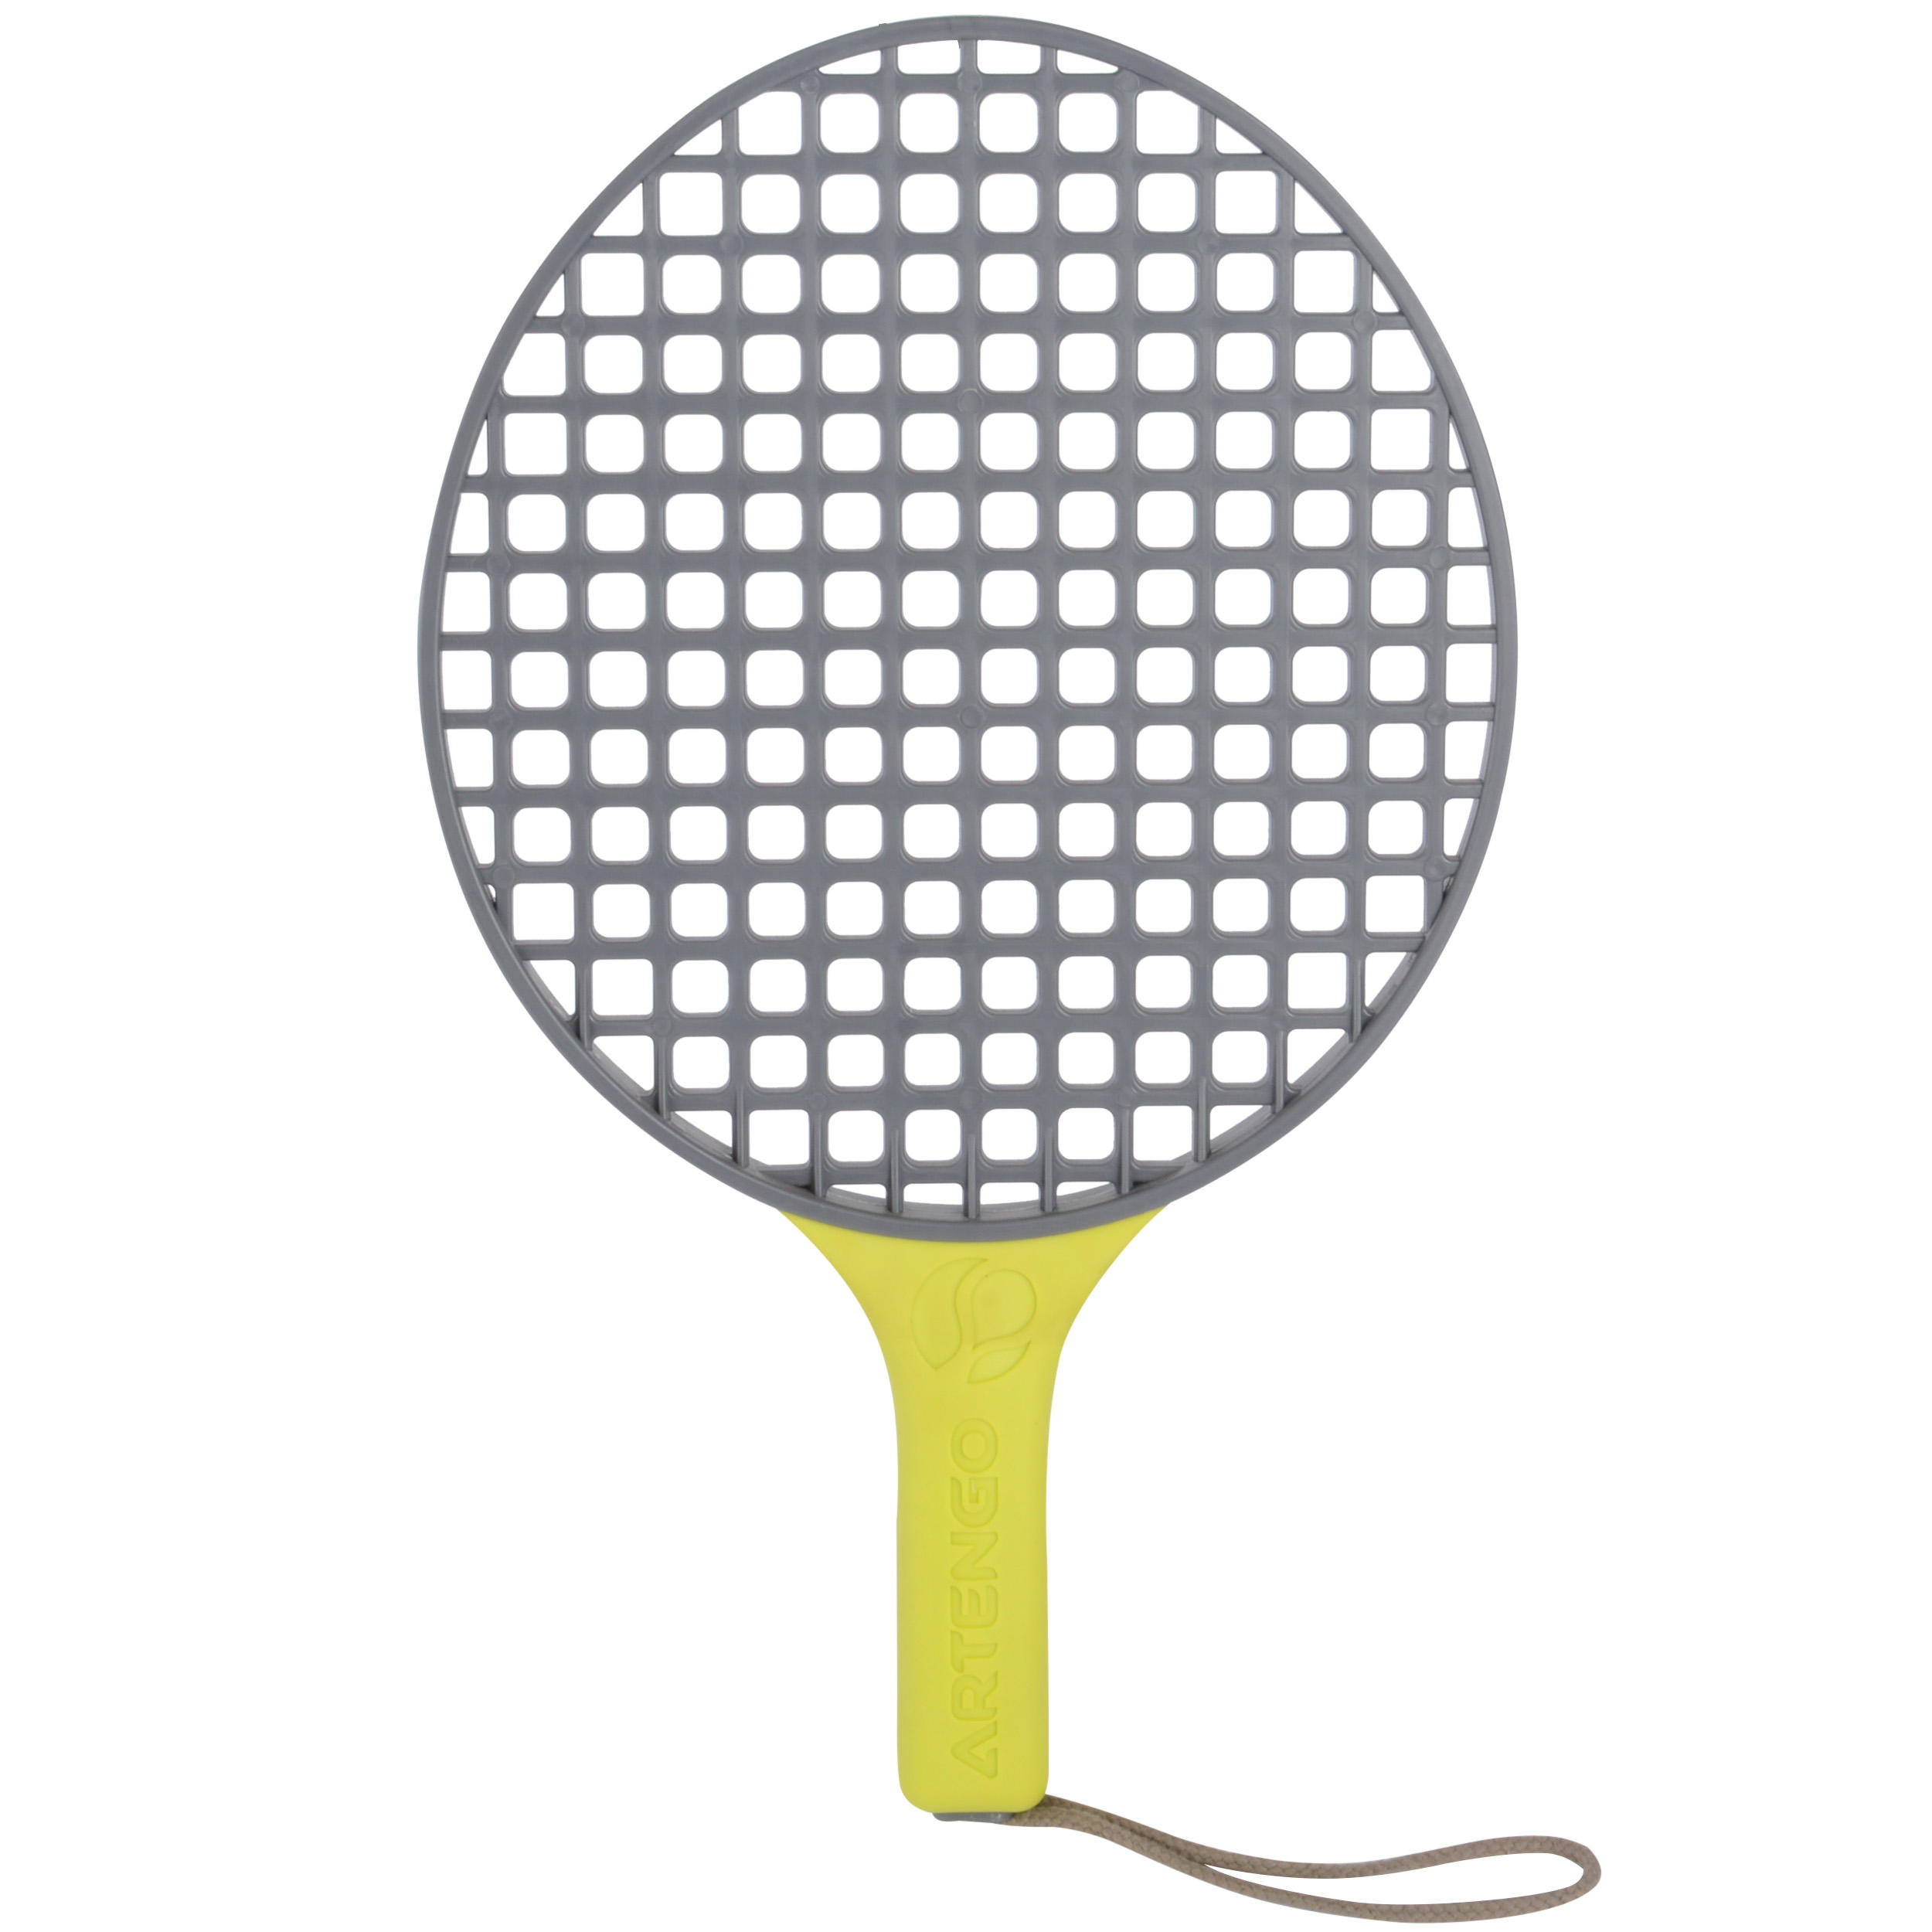 ARTENGO Turnball Perf Speedball Racket - Grey/Yellow